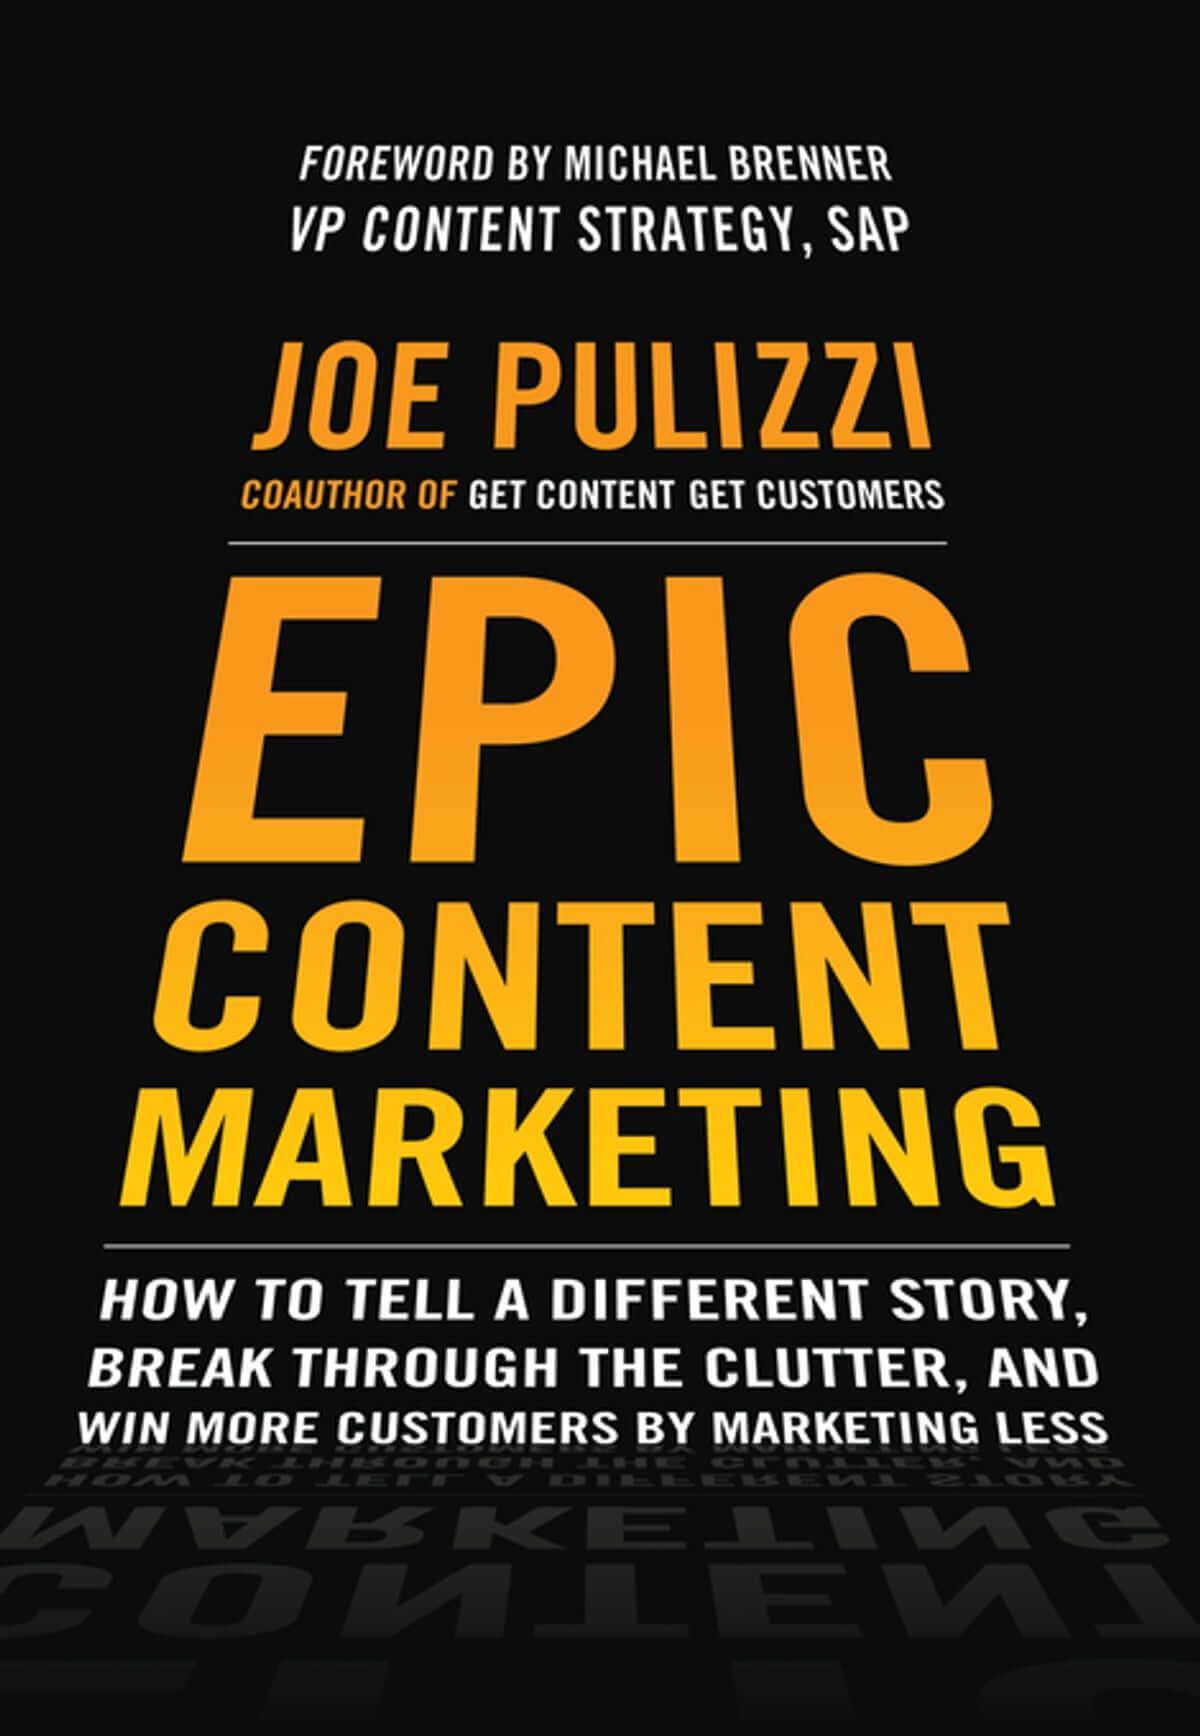 book cover of Joe Pulizzi's book, "Epic Content Marketing"